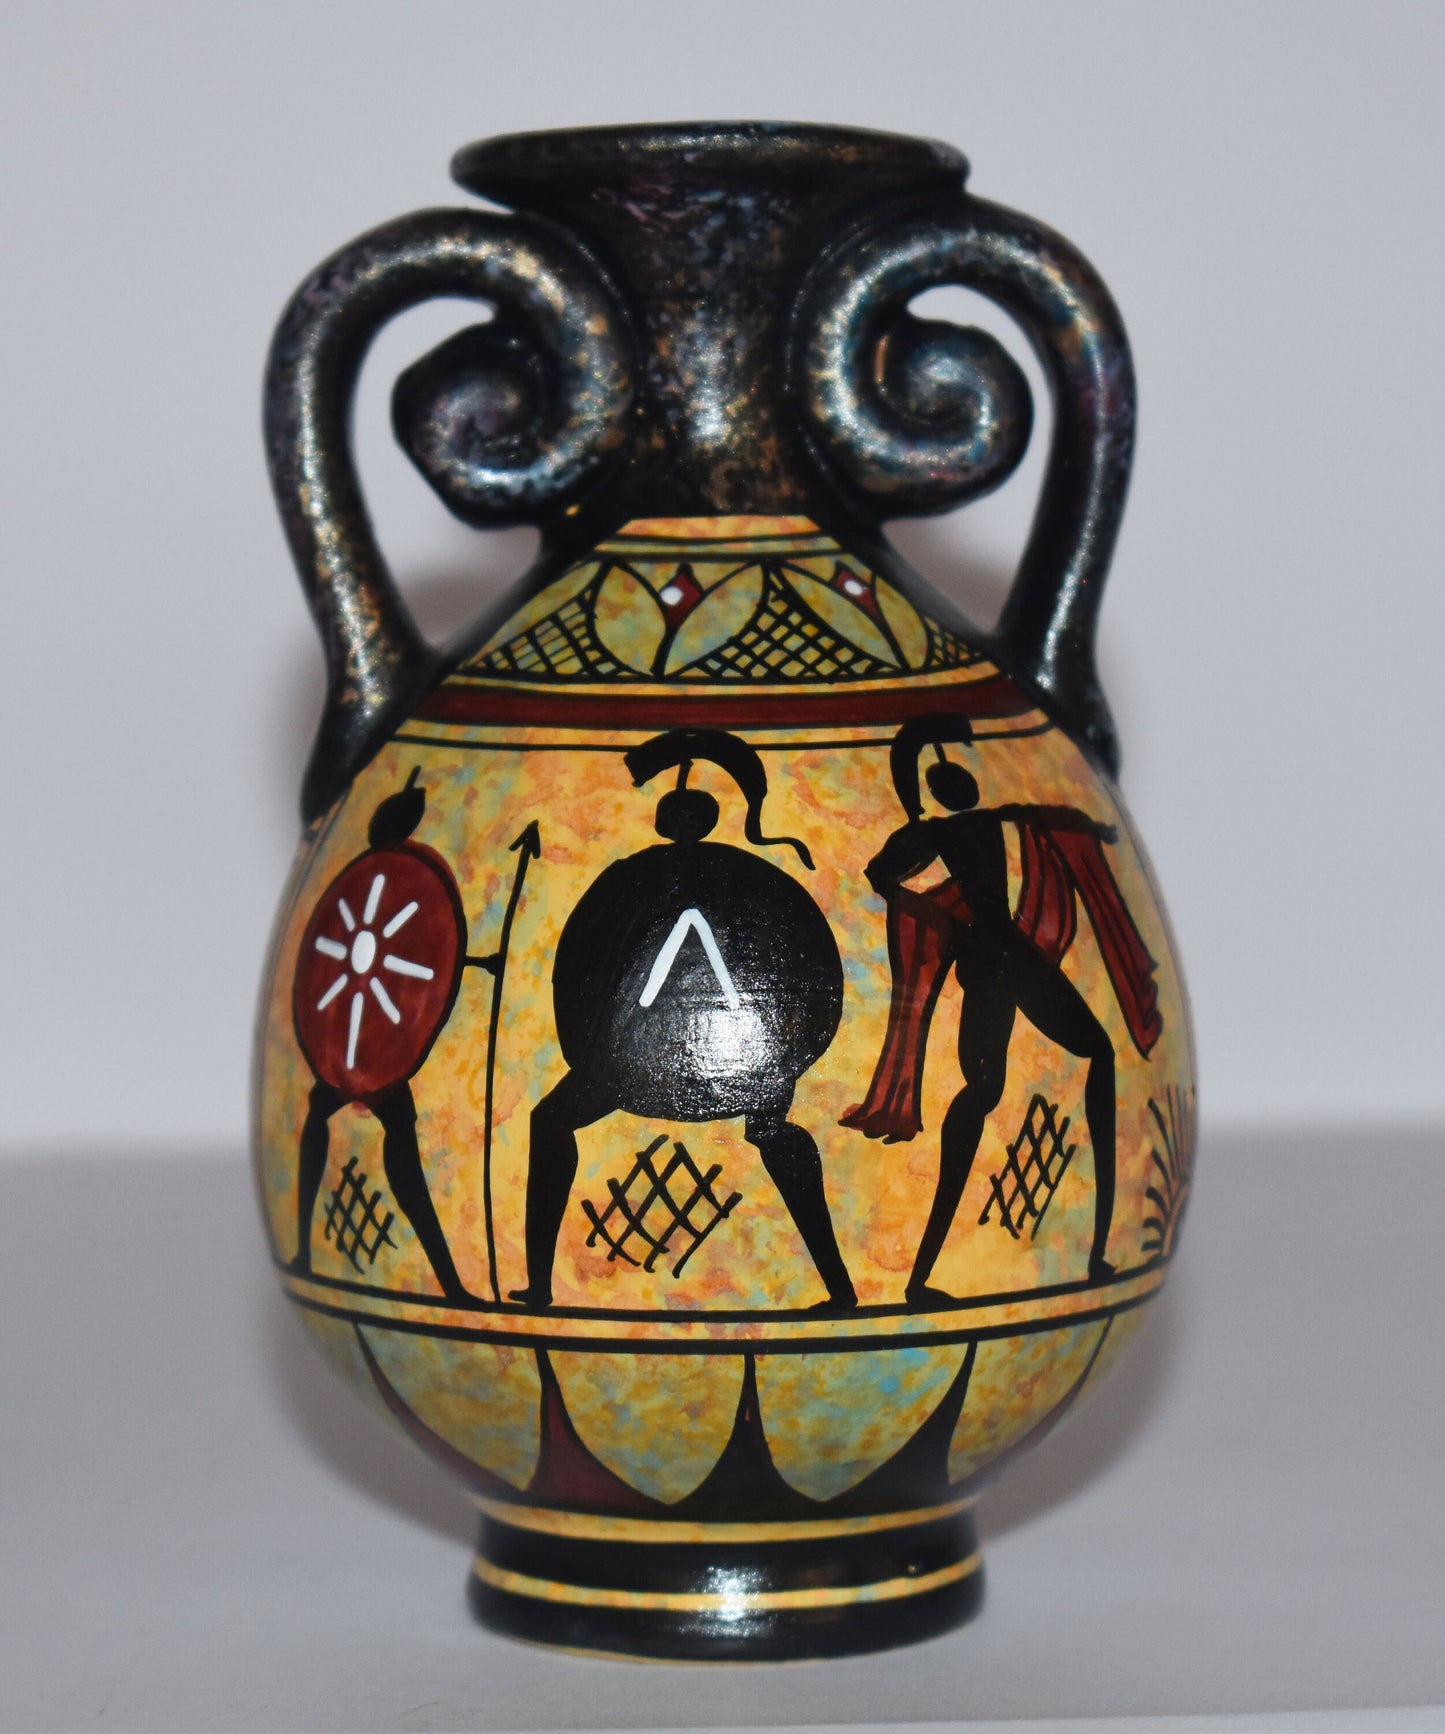 Ancient Greek vase with warriors - Miniature Ceramic piece - Geometric Period - Handmade in Greece